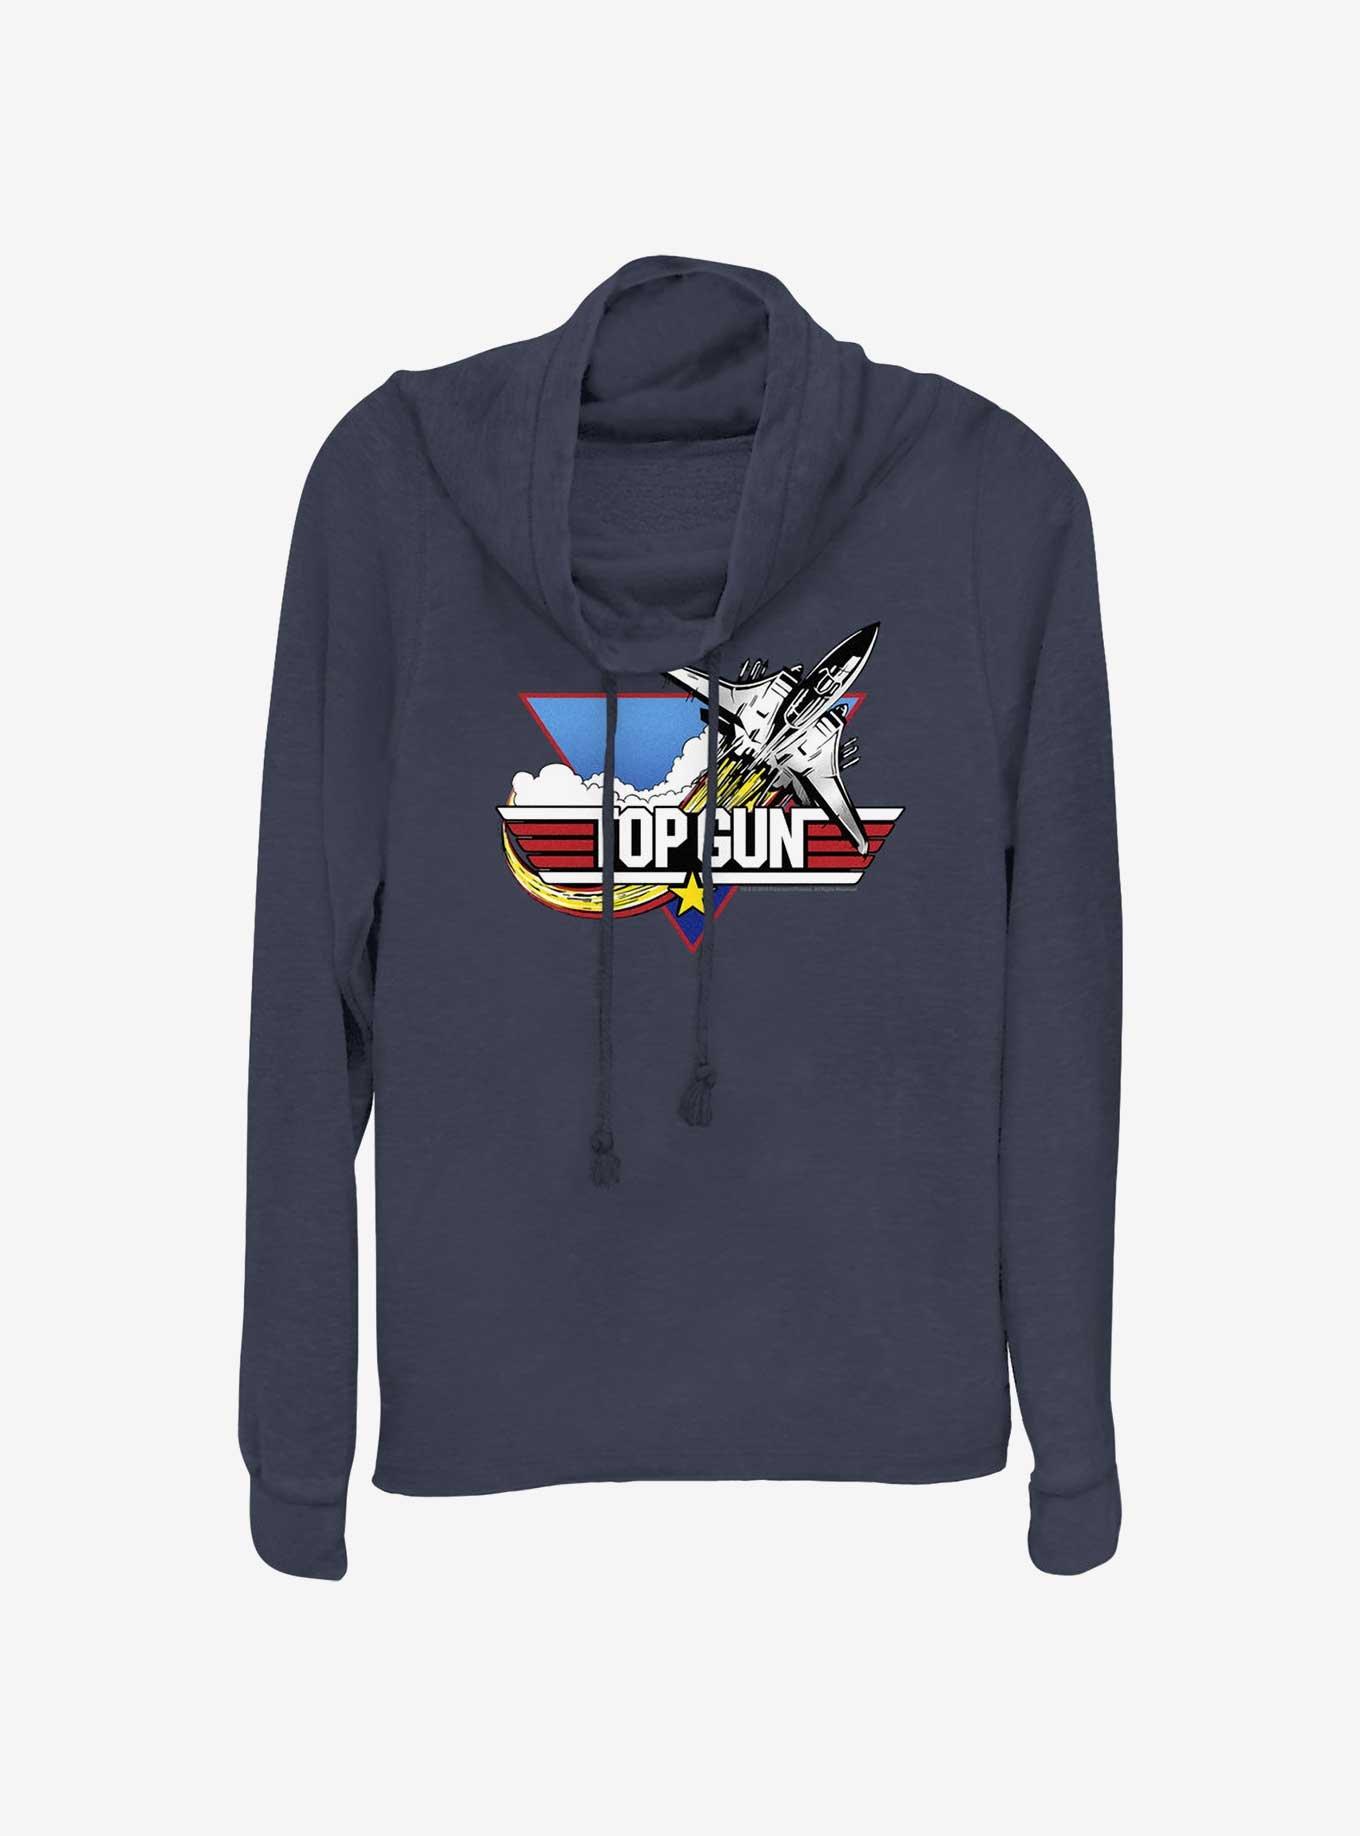  Top Gun Maverick Logo Pullover Hoodie : Clothing